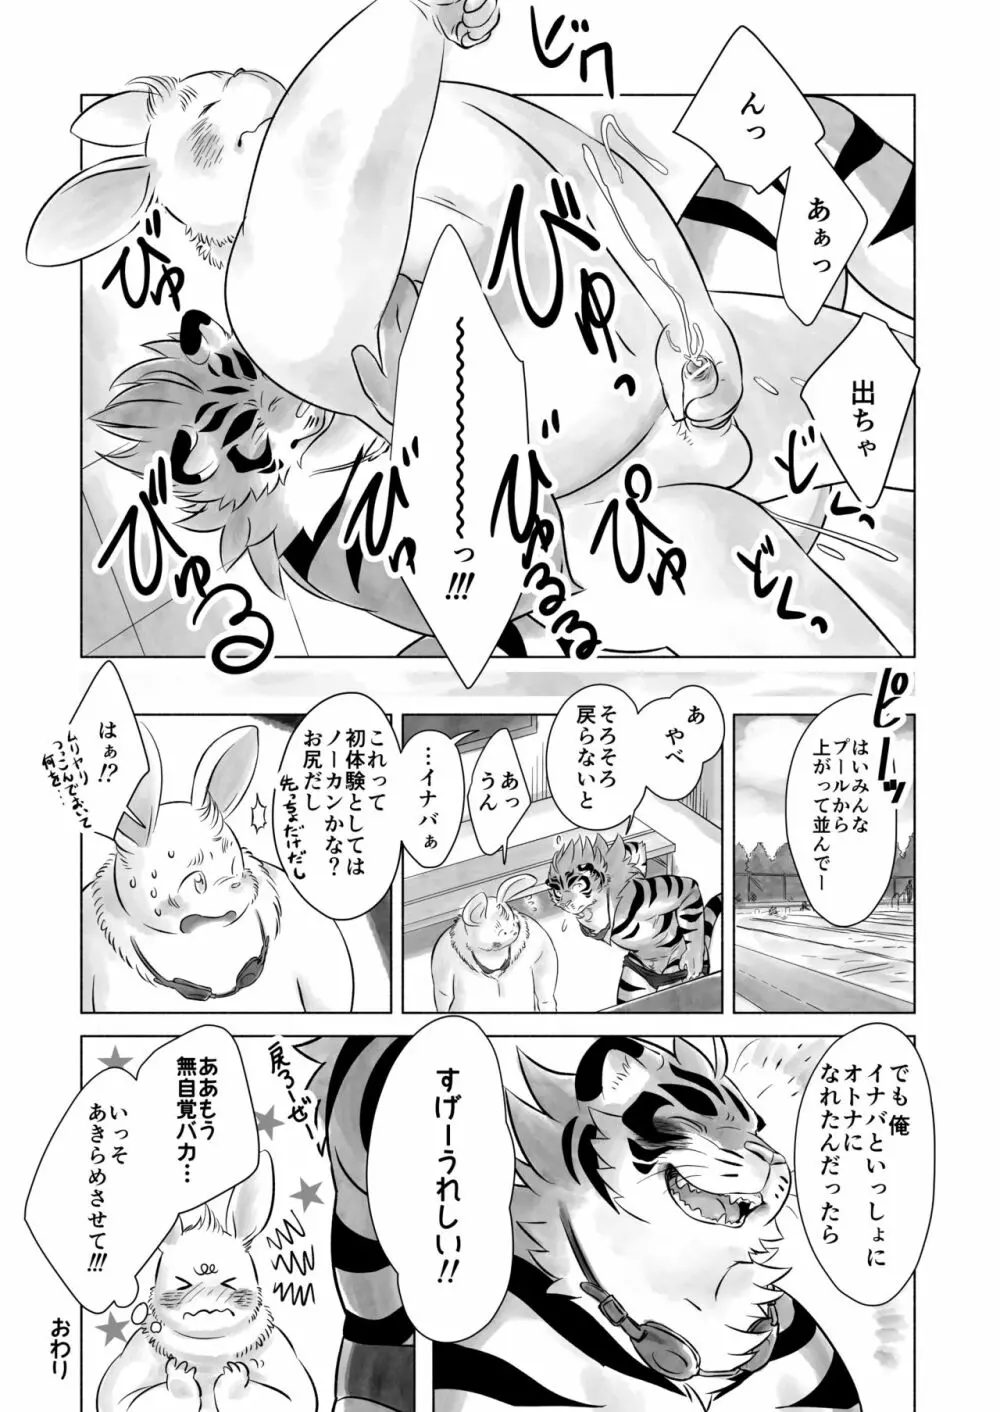 Koda_kota – Bunny and Tiger + extras 9ページ